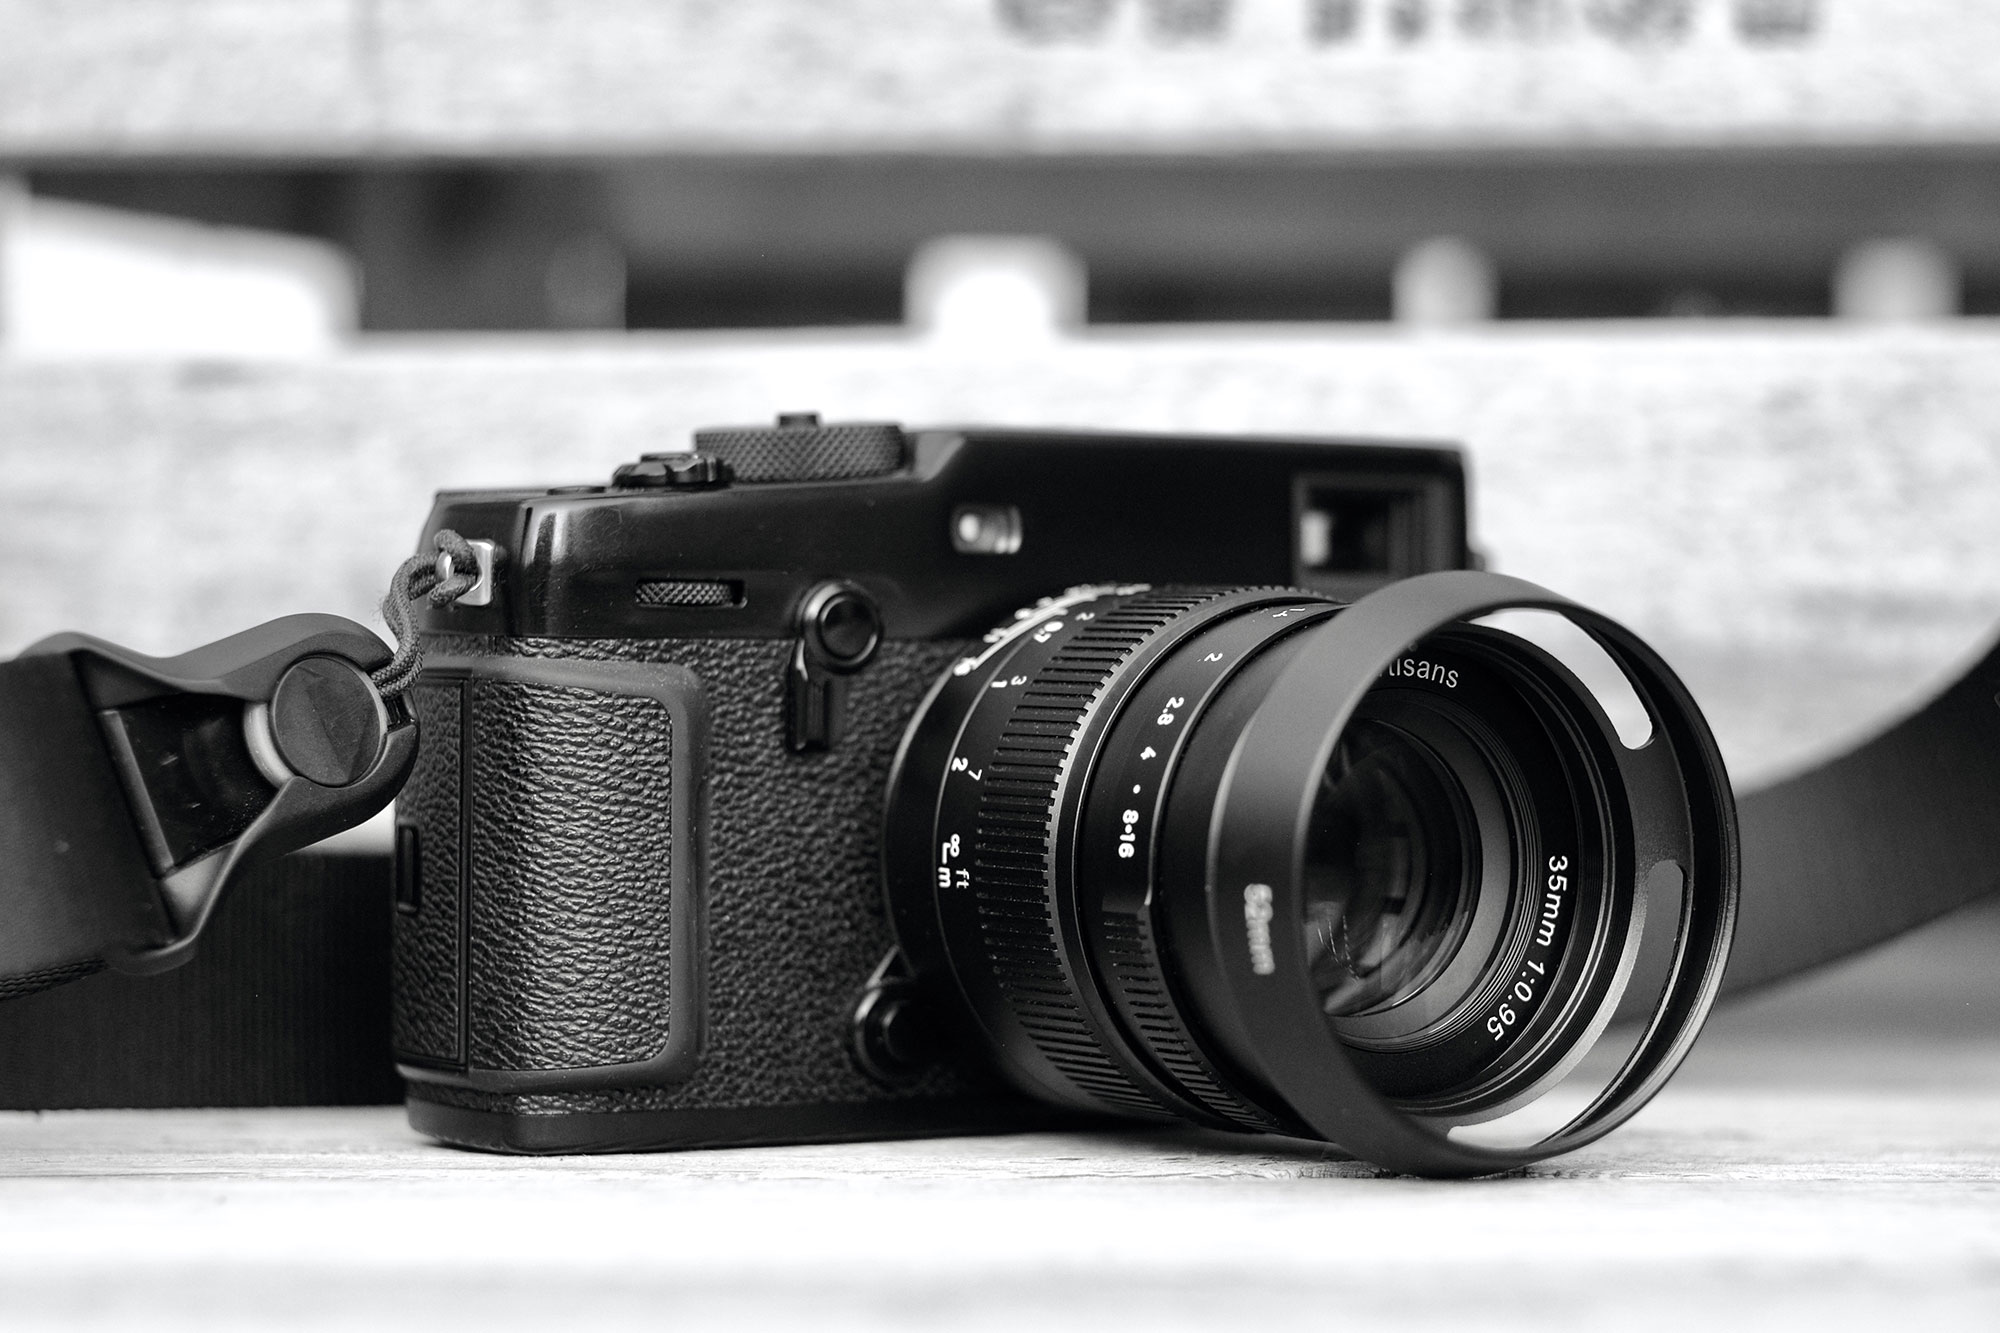 7artisans 35mm F0.95 Manual Focus Lens APS-C Fit for Compact Mirrorless Cameras Compatible with Fuji X-A1 X-A10 X-A2 X-A3 A-at X-M1 XM2 X-T1 X-T10 X-T2 X-T20 X-Pro1 X-Pro2 X-E1 X-E2 E-E2s X-E3 